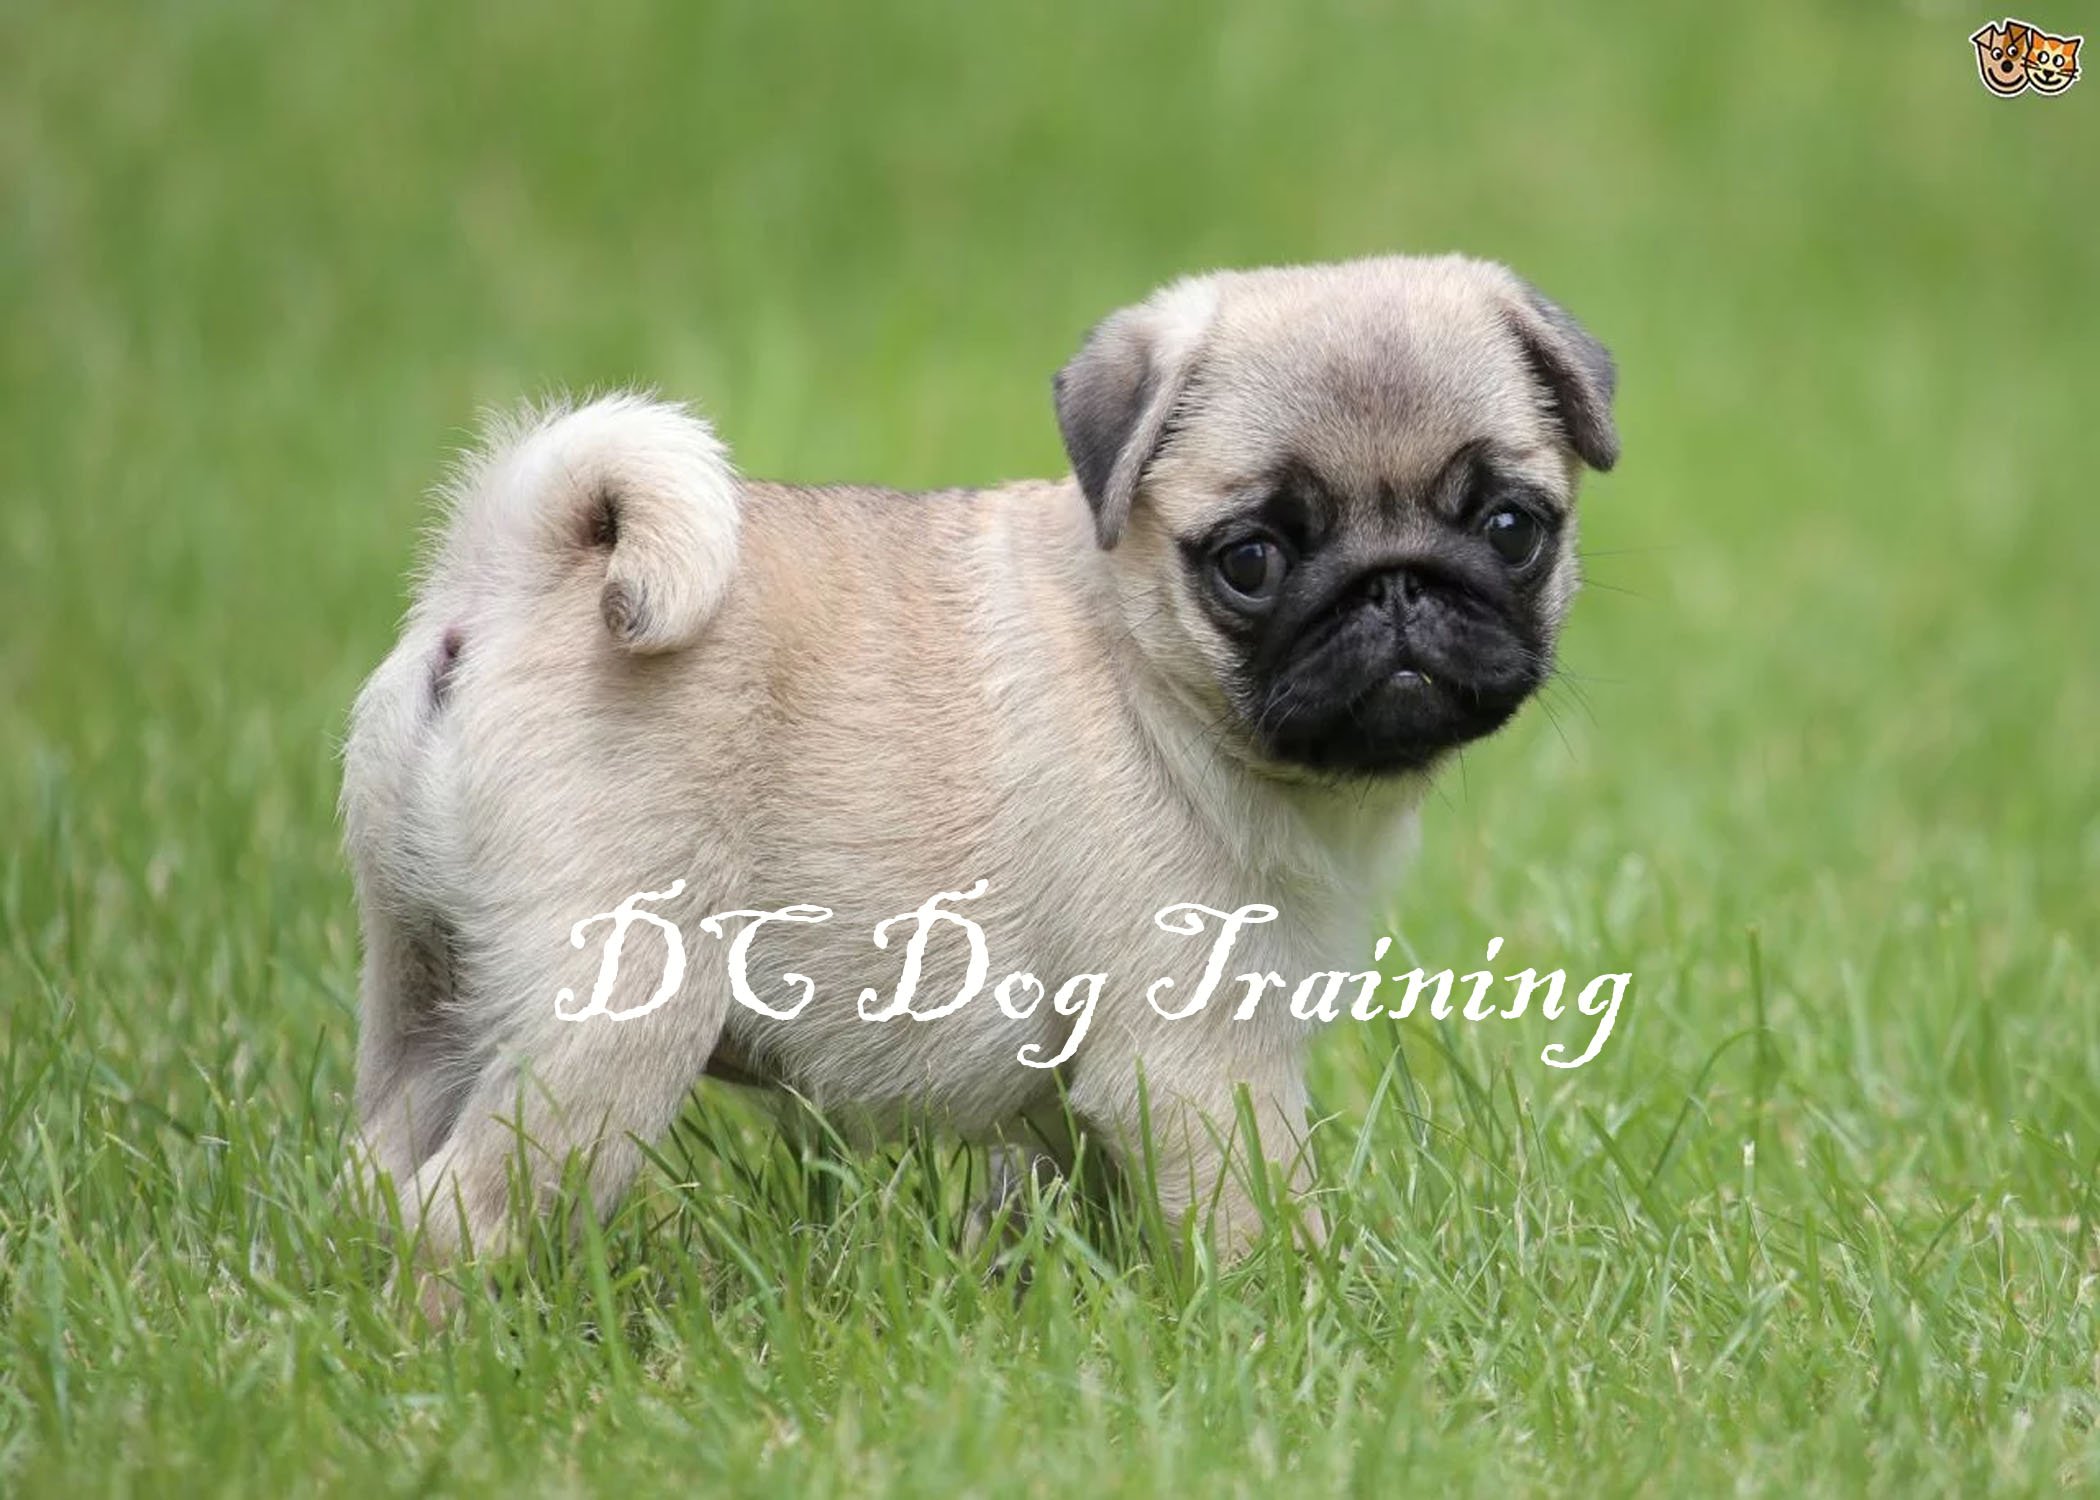 DC Dog Training Society